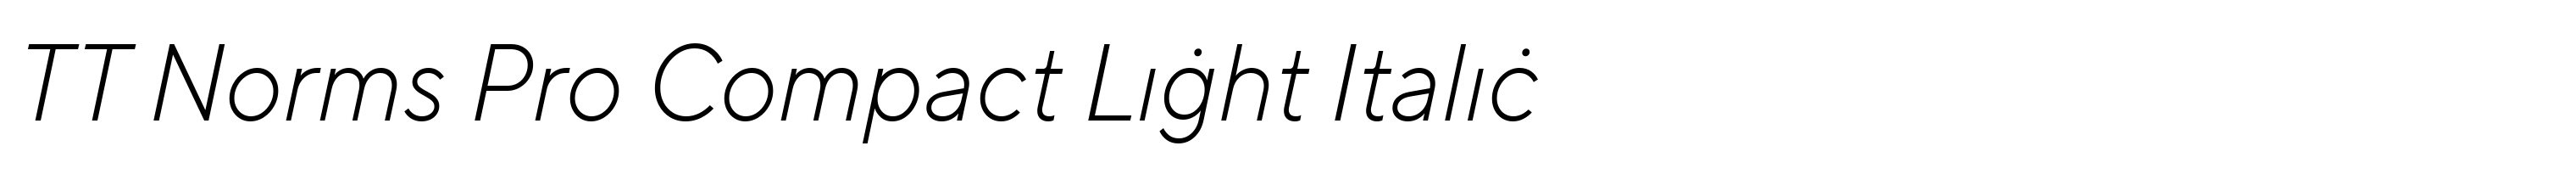 TT Norms Pro Compact Light Italic